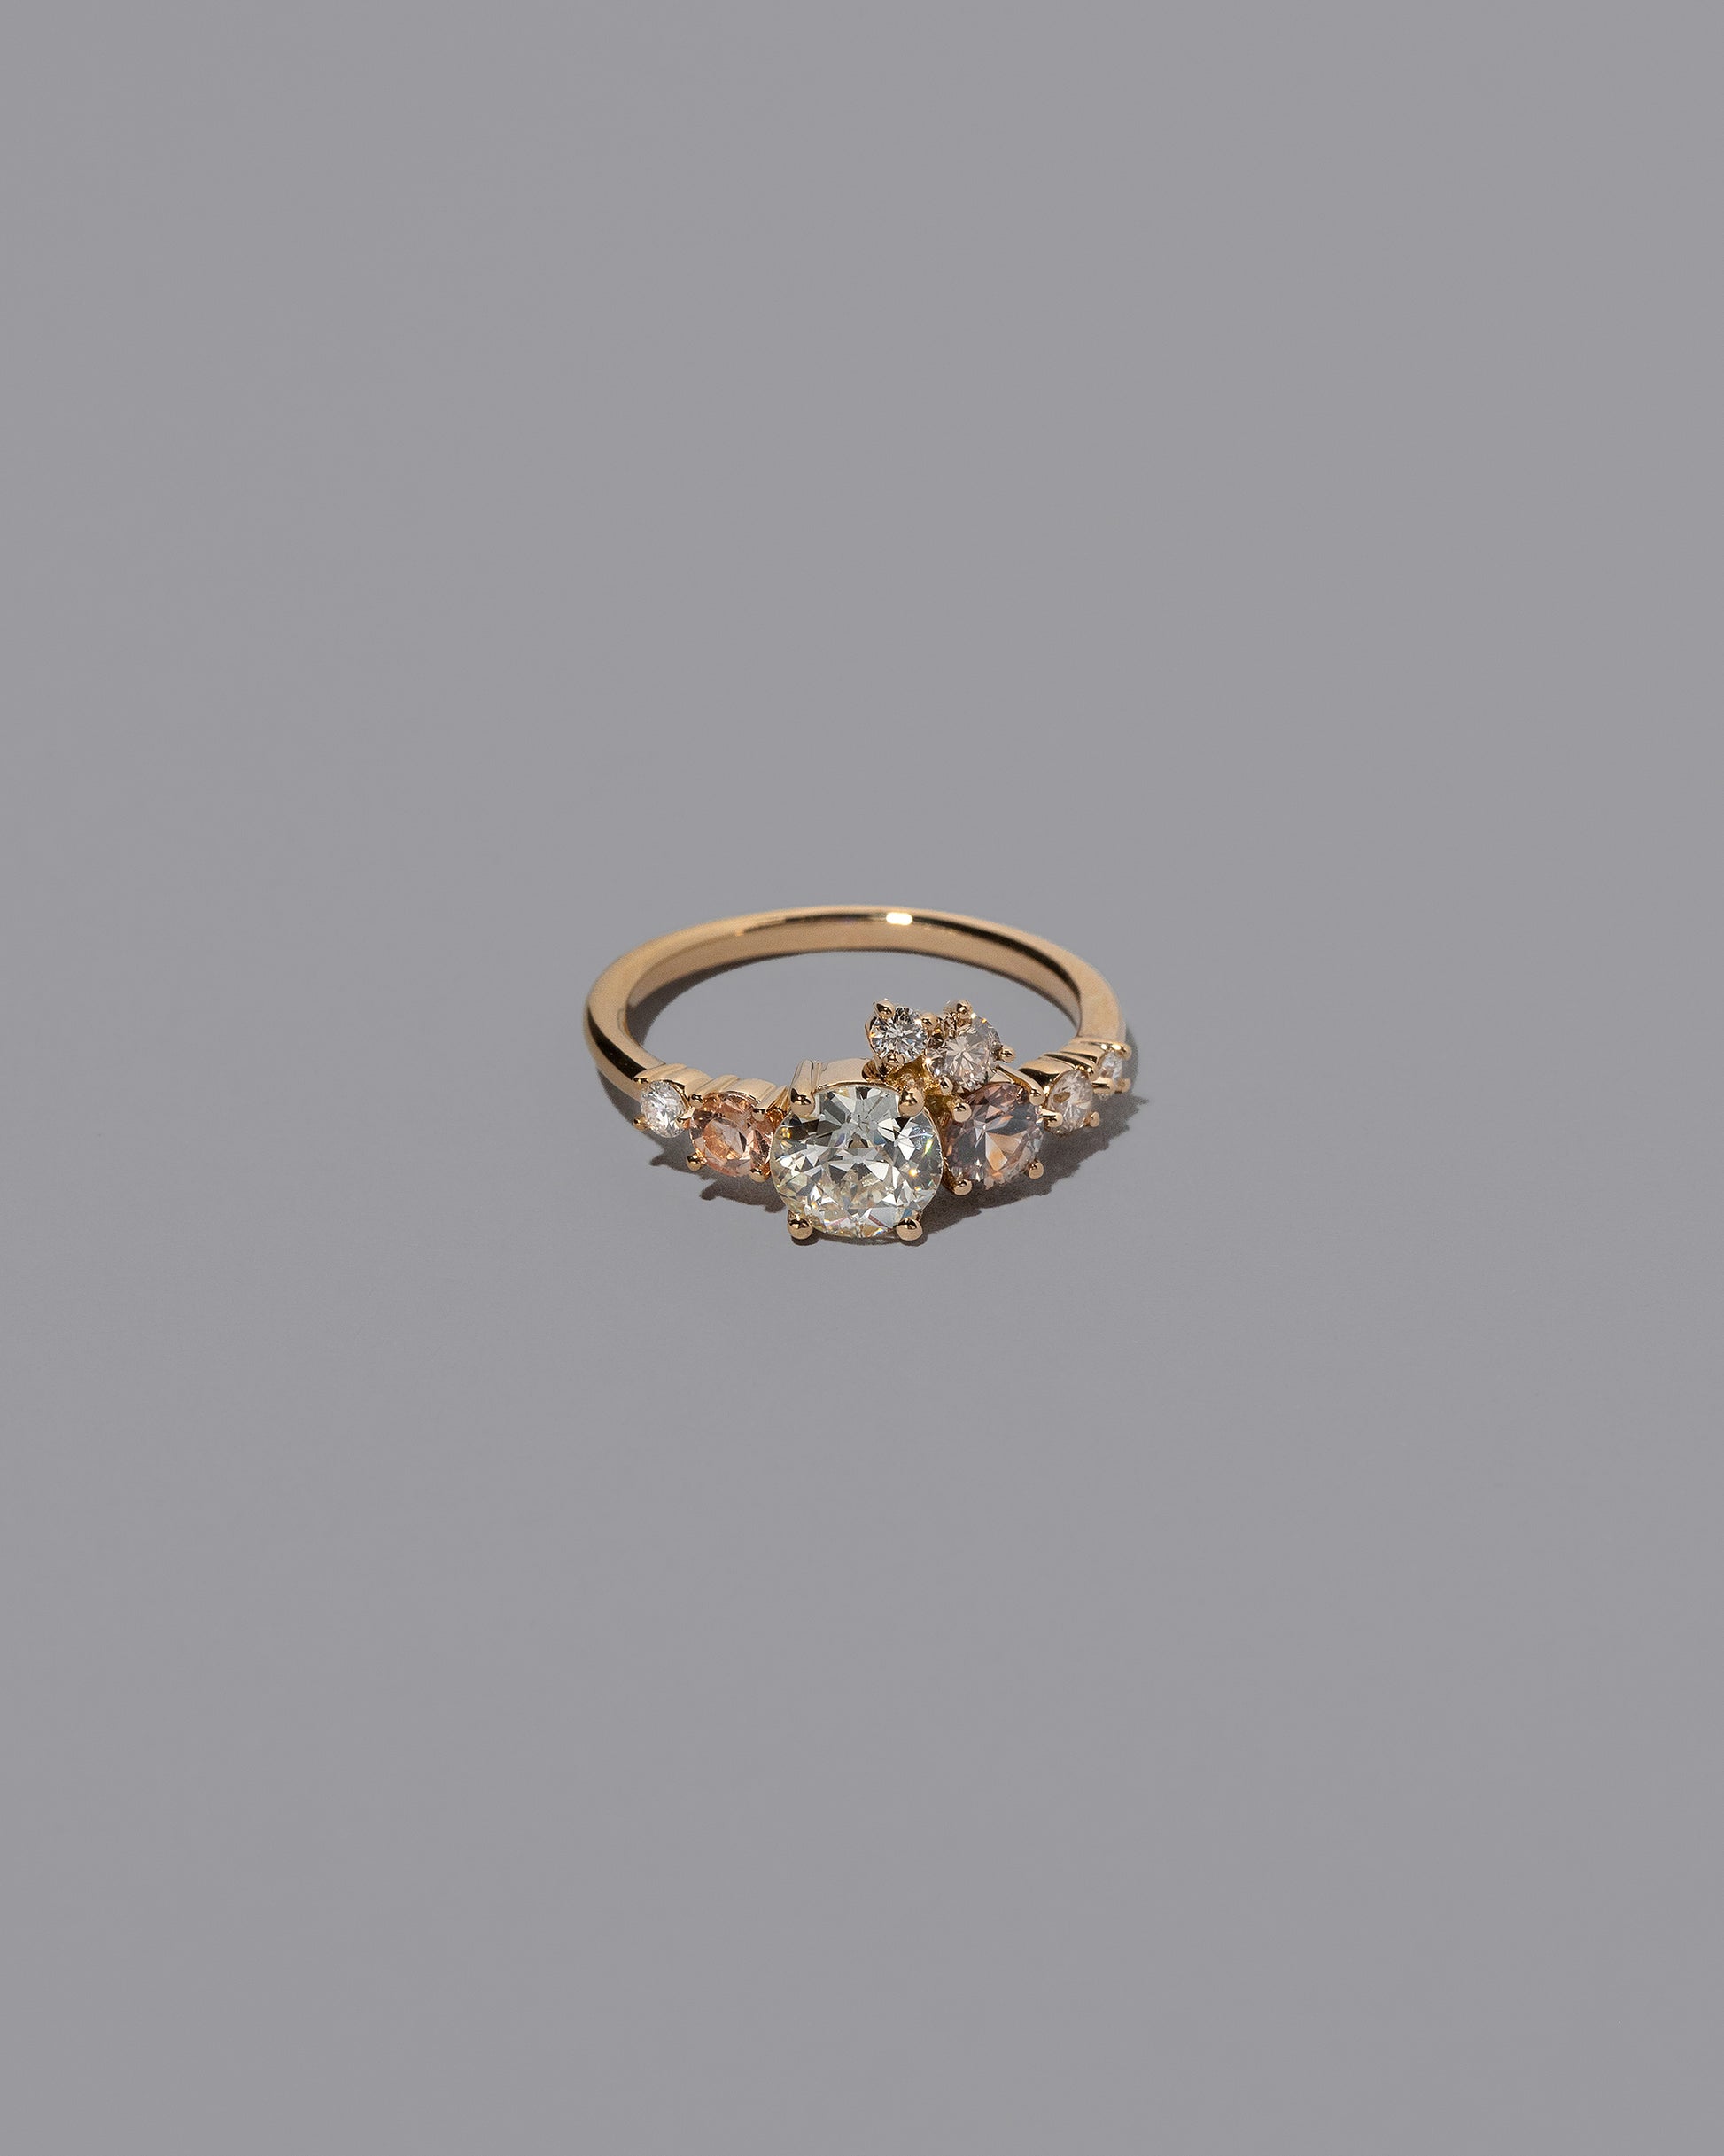 Peach Sapphire & Diamonds Luna Ring on light color background.